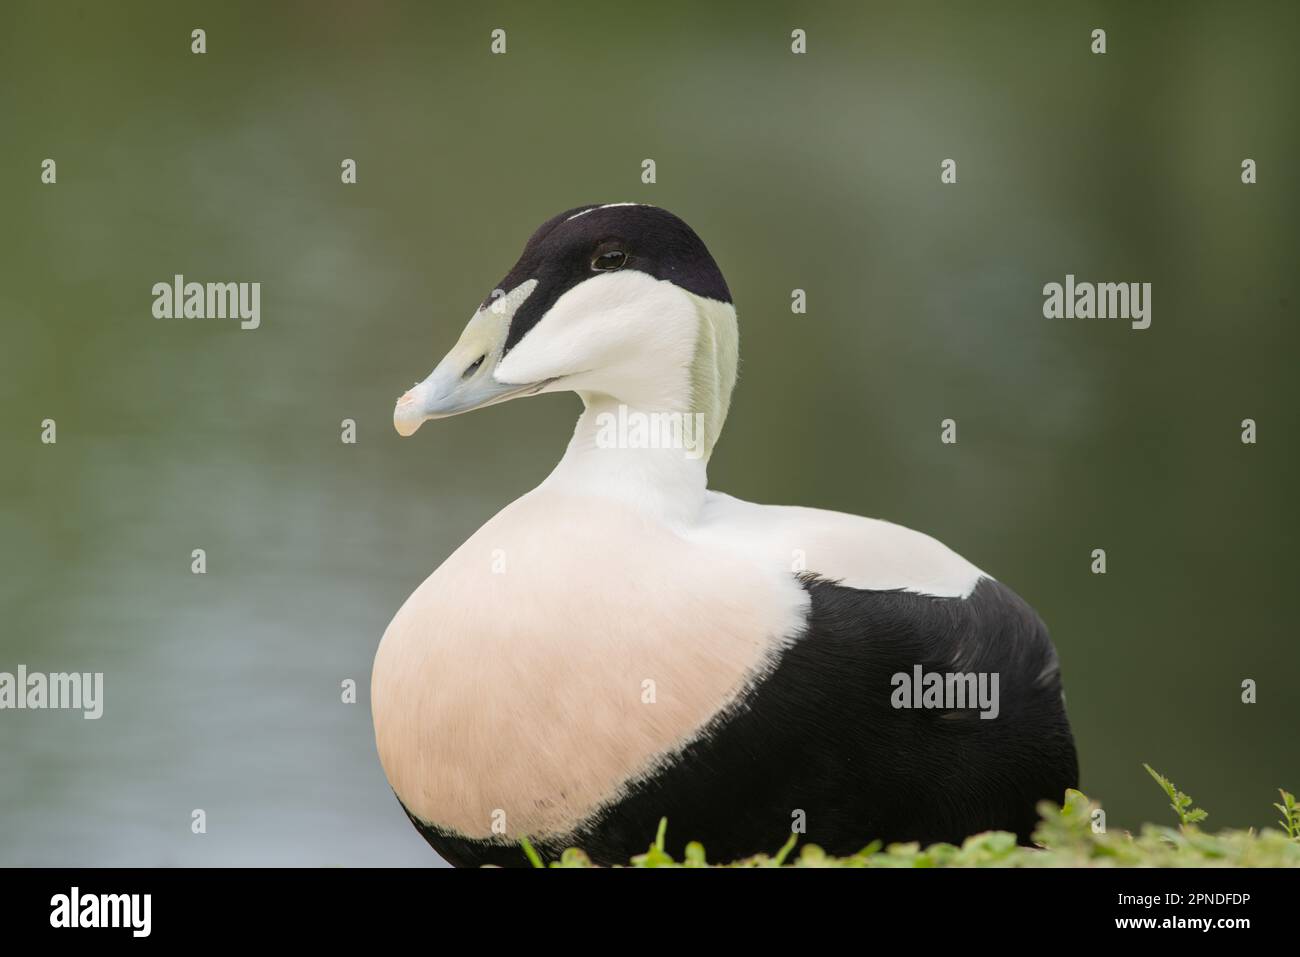 Common eider duck, Somateria mollissima, on a lake at Llanelli Wetlands, Wales, UK Stock Photo